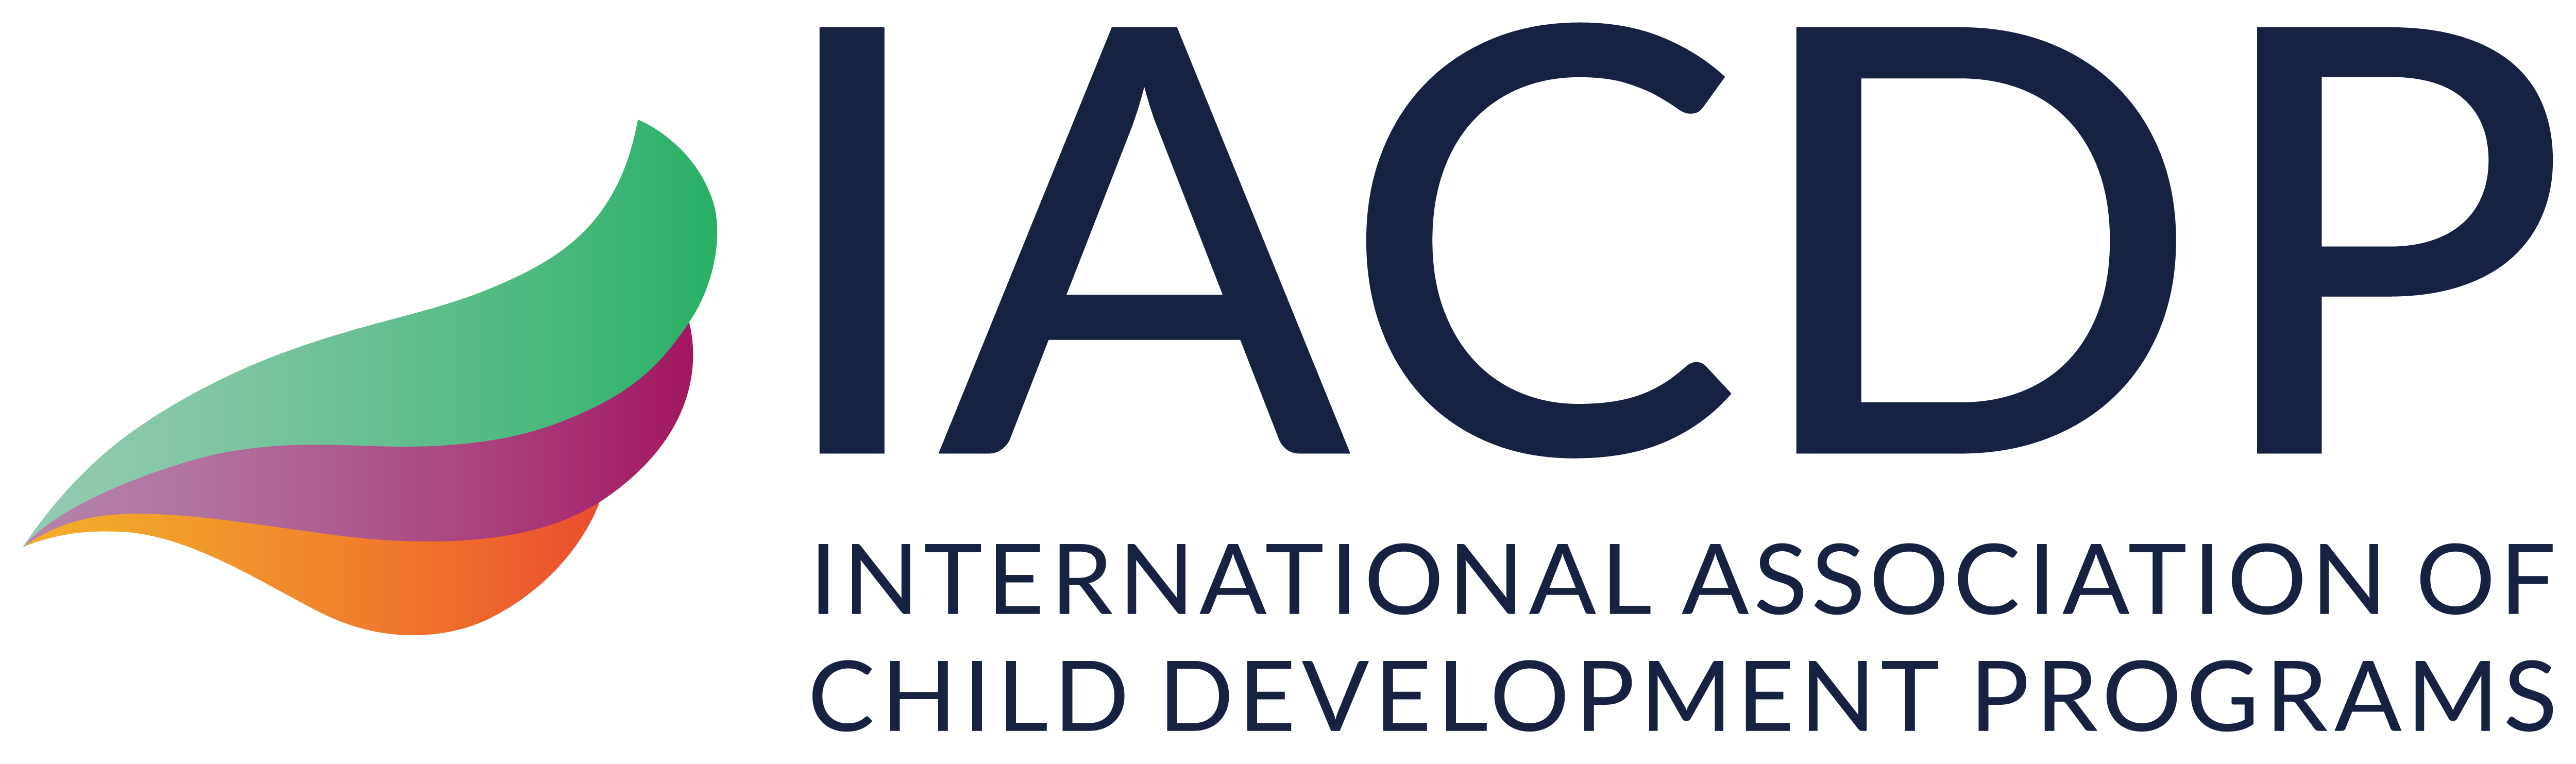 iacdp-logo